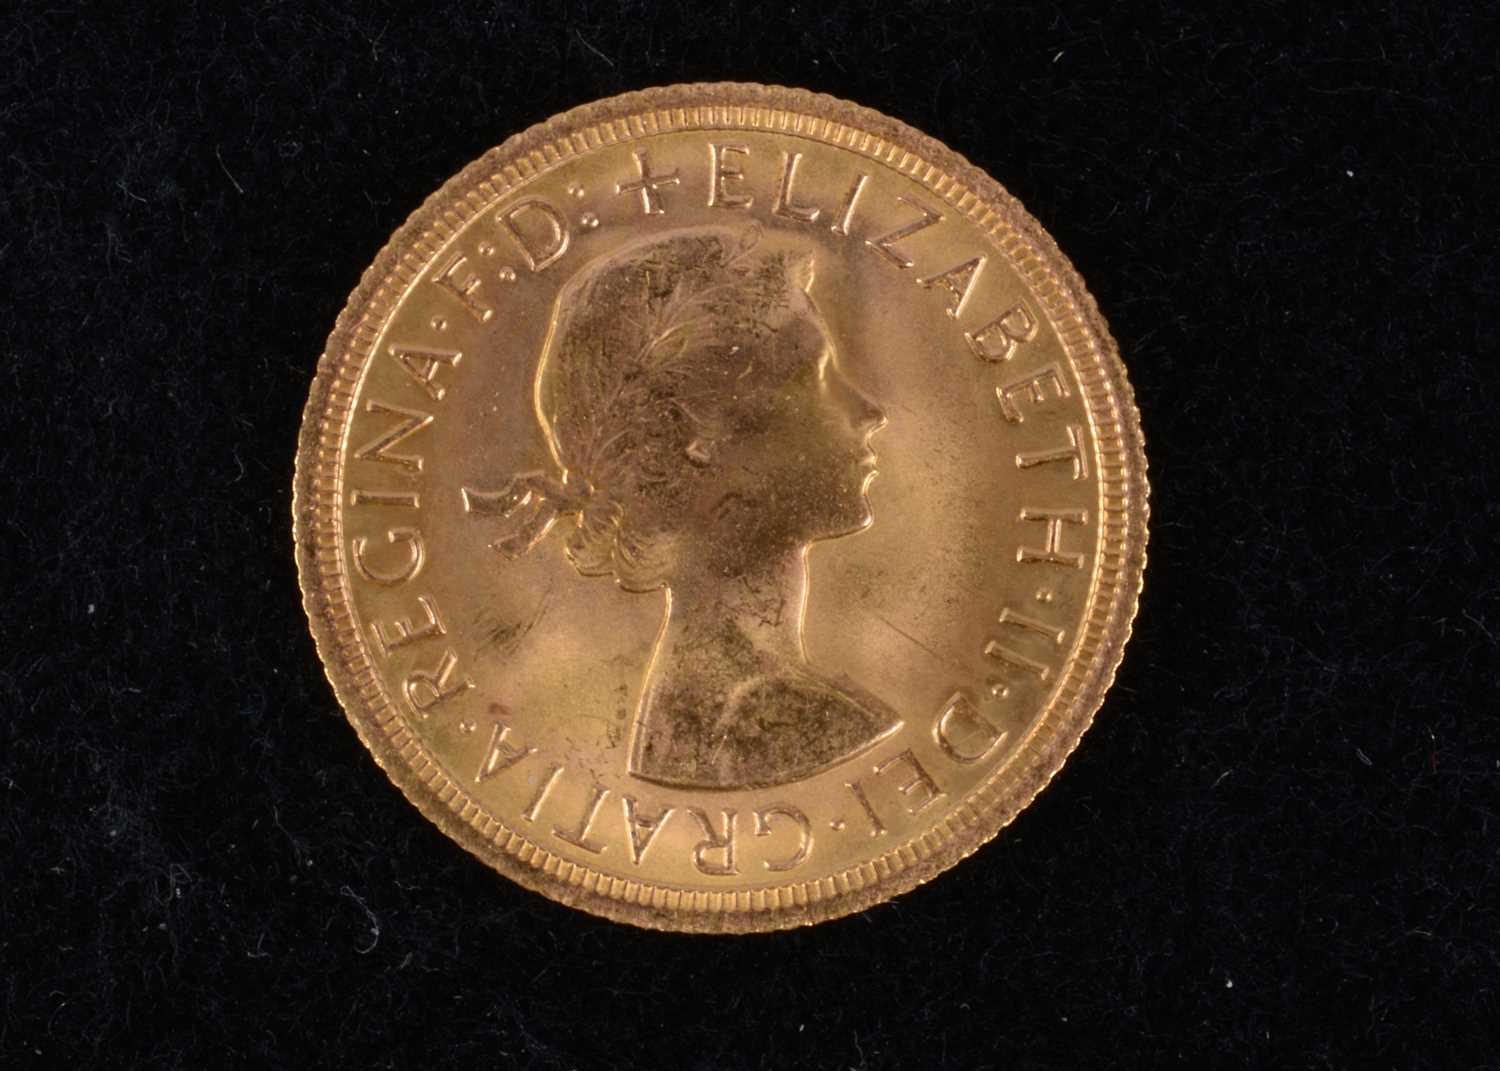 Lot 8 - An Elizabeth II Full Gold Sovereign